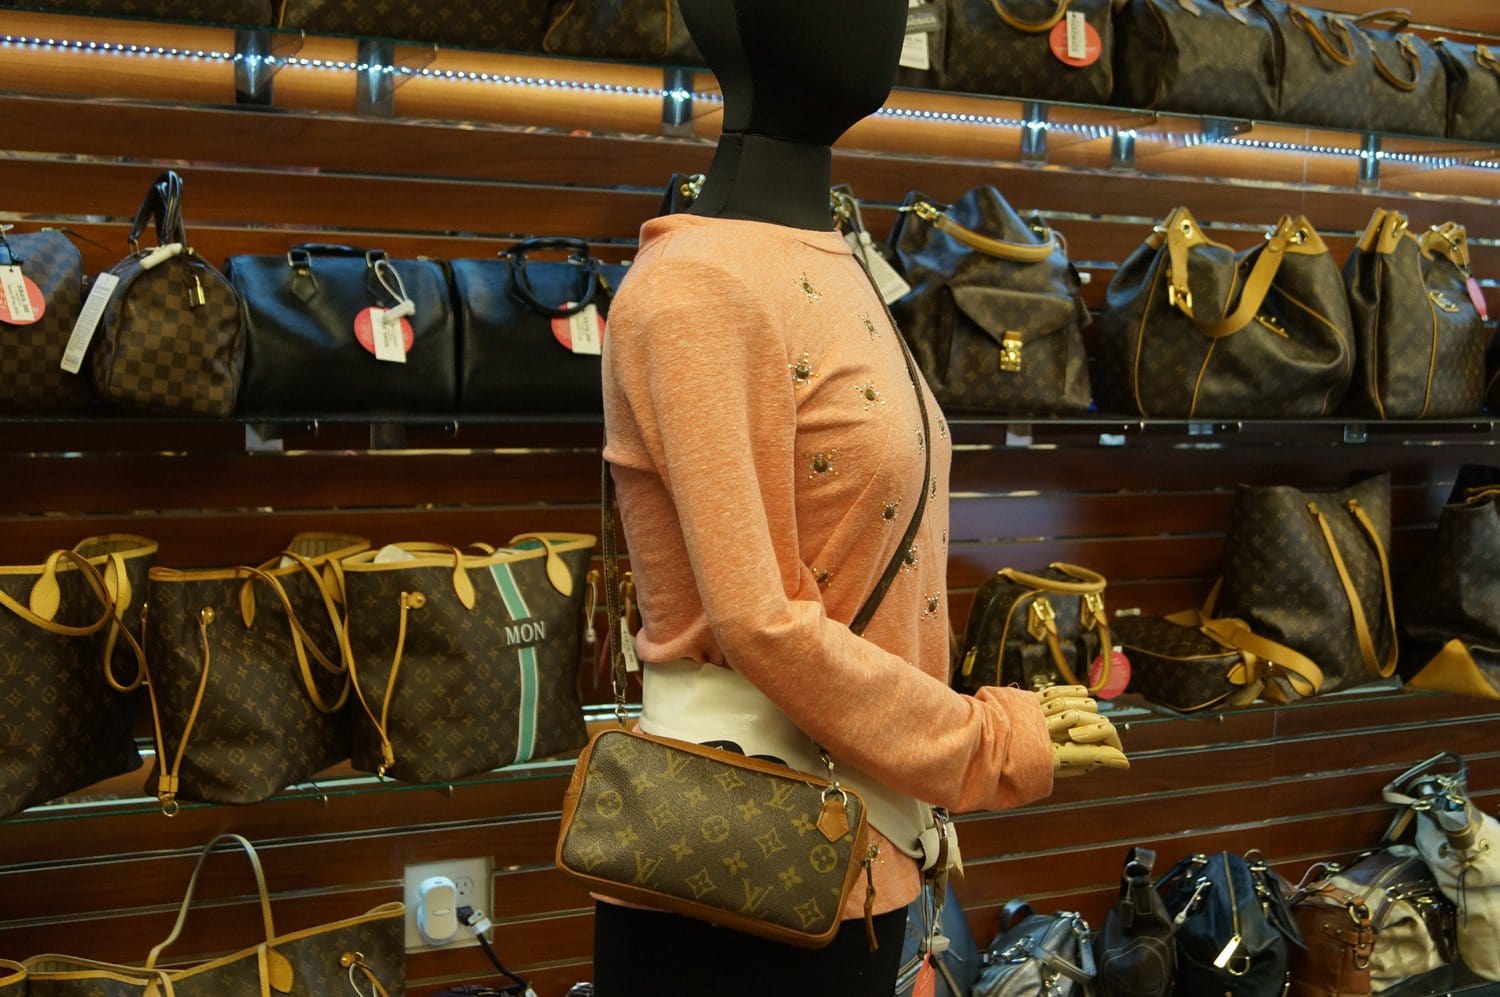 Louis Vuitton Marly Shoulder bag 346011